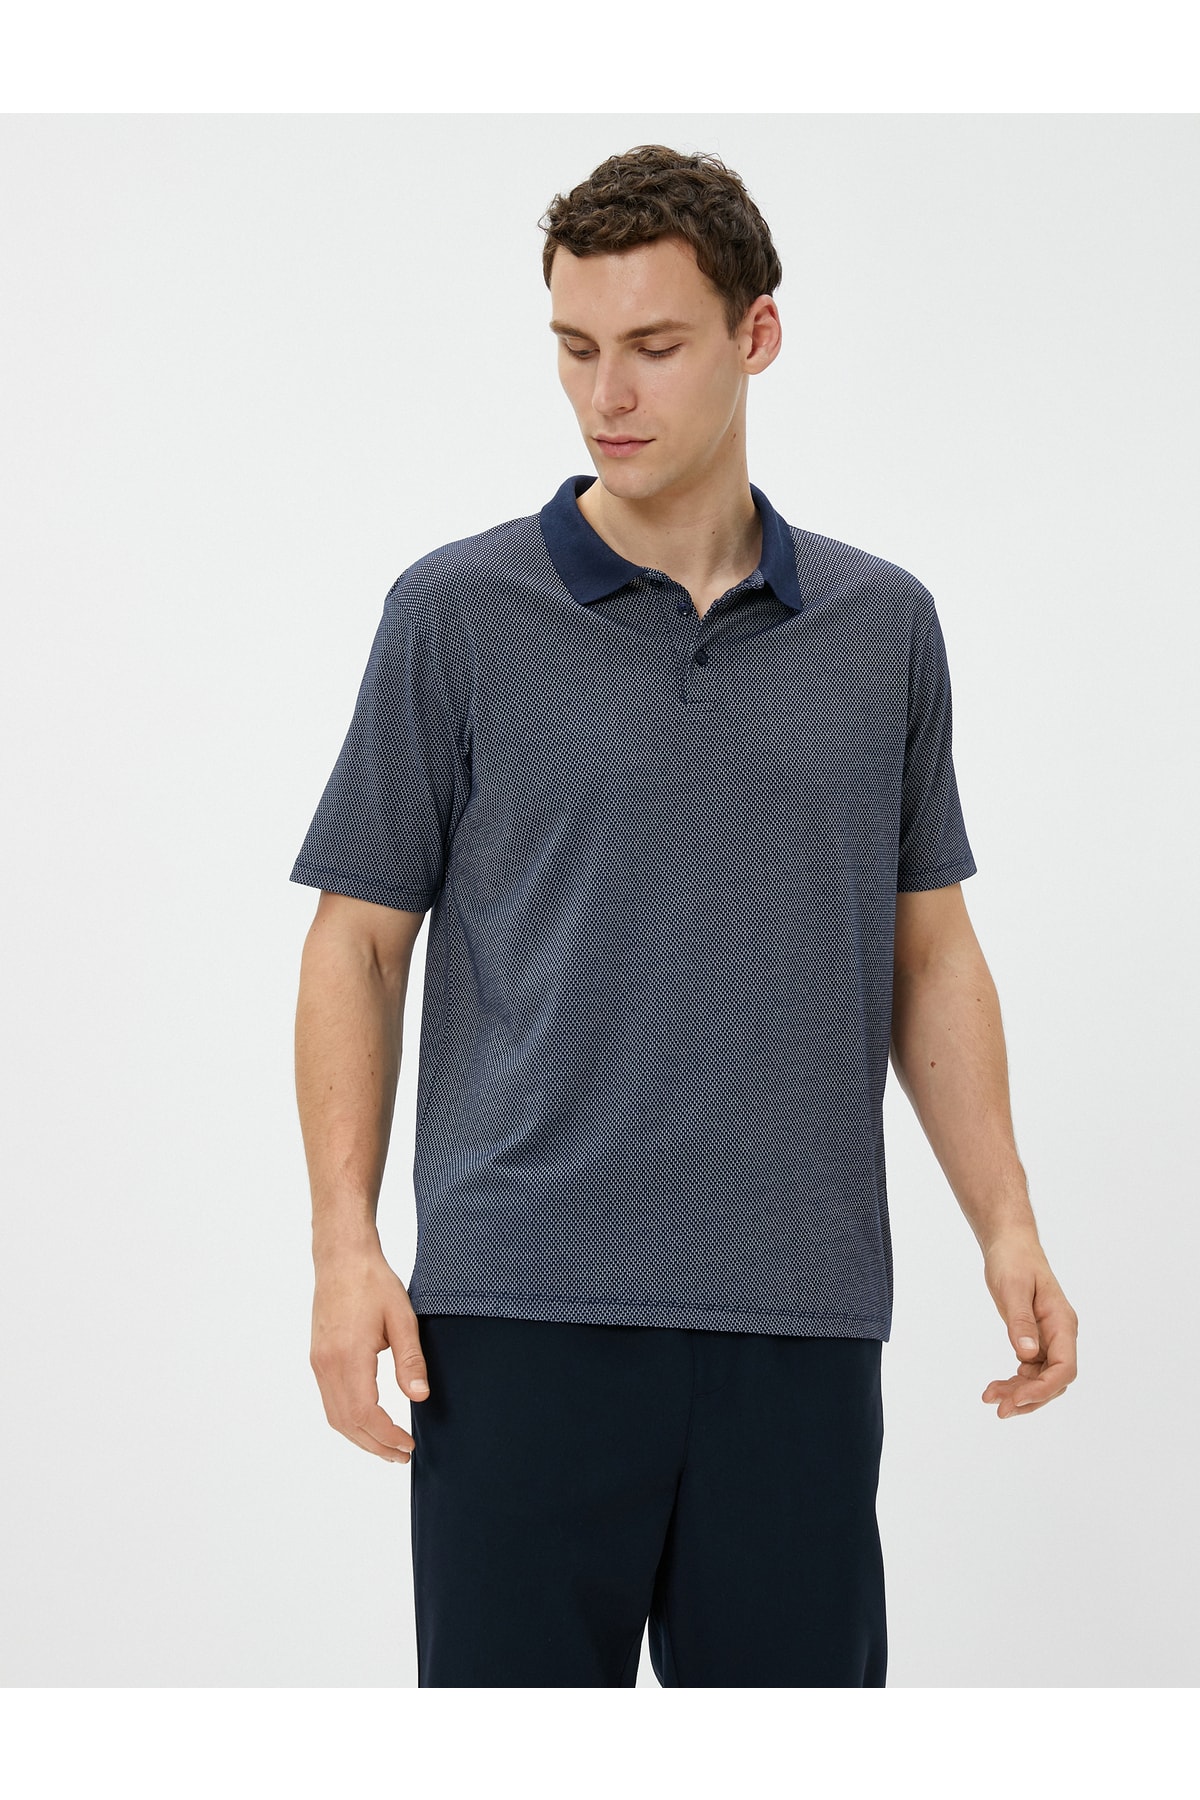 Базовая футболка с воротником-поло на пуговицах с коротким рукавом Koton, темно-синий базовая футболка с воротником поло на пуговицах с коротким рукавом koton хаки